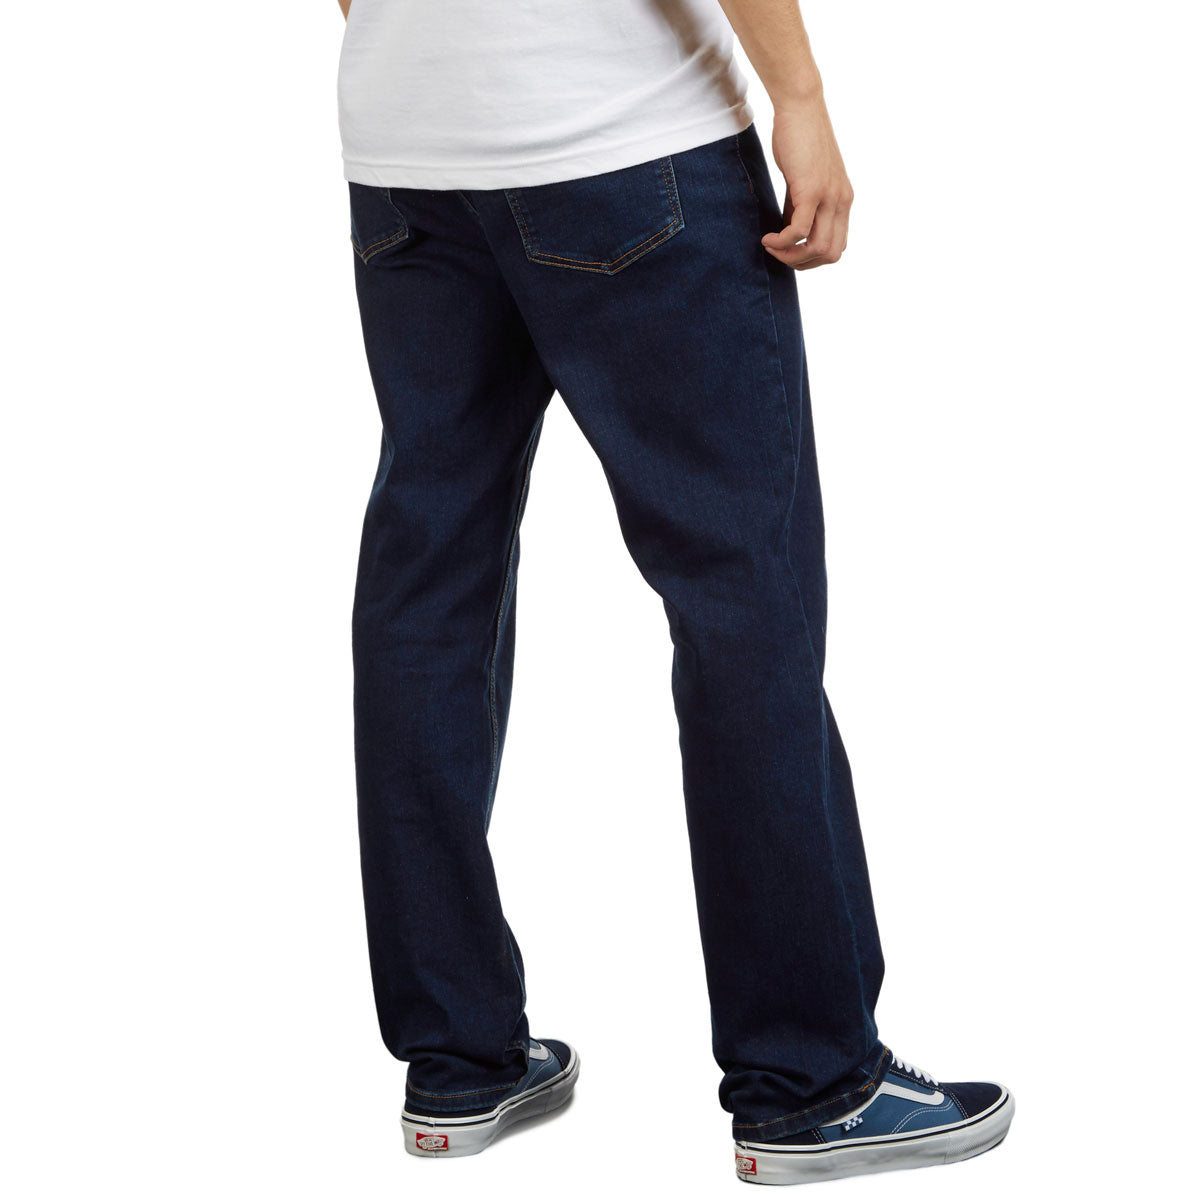 CCS Standard Plus Relaxed Denim Jeans - Indigo image 3